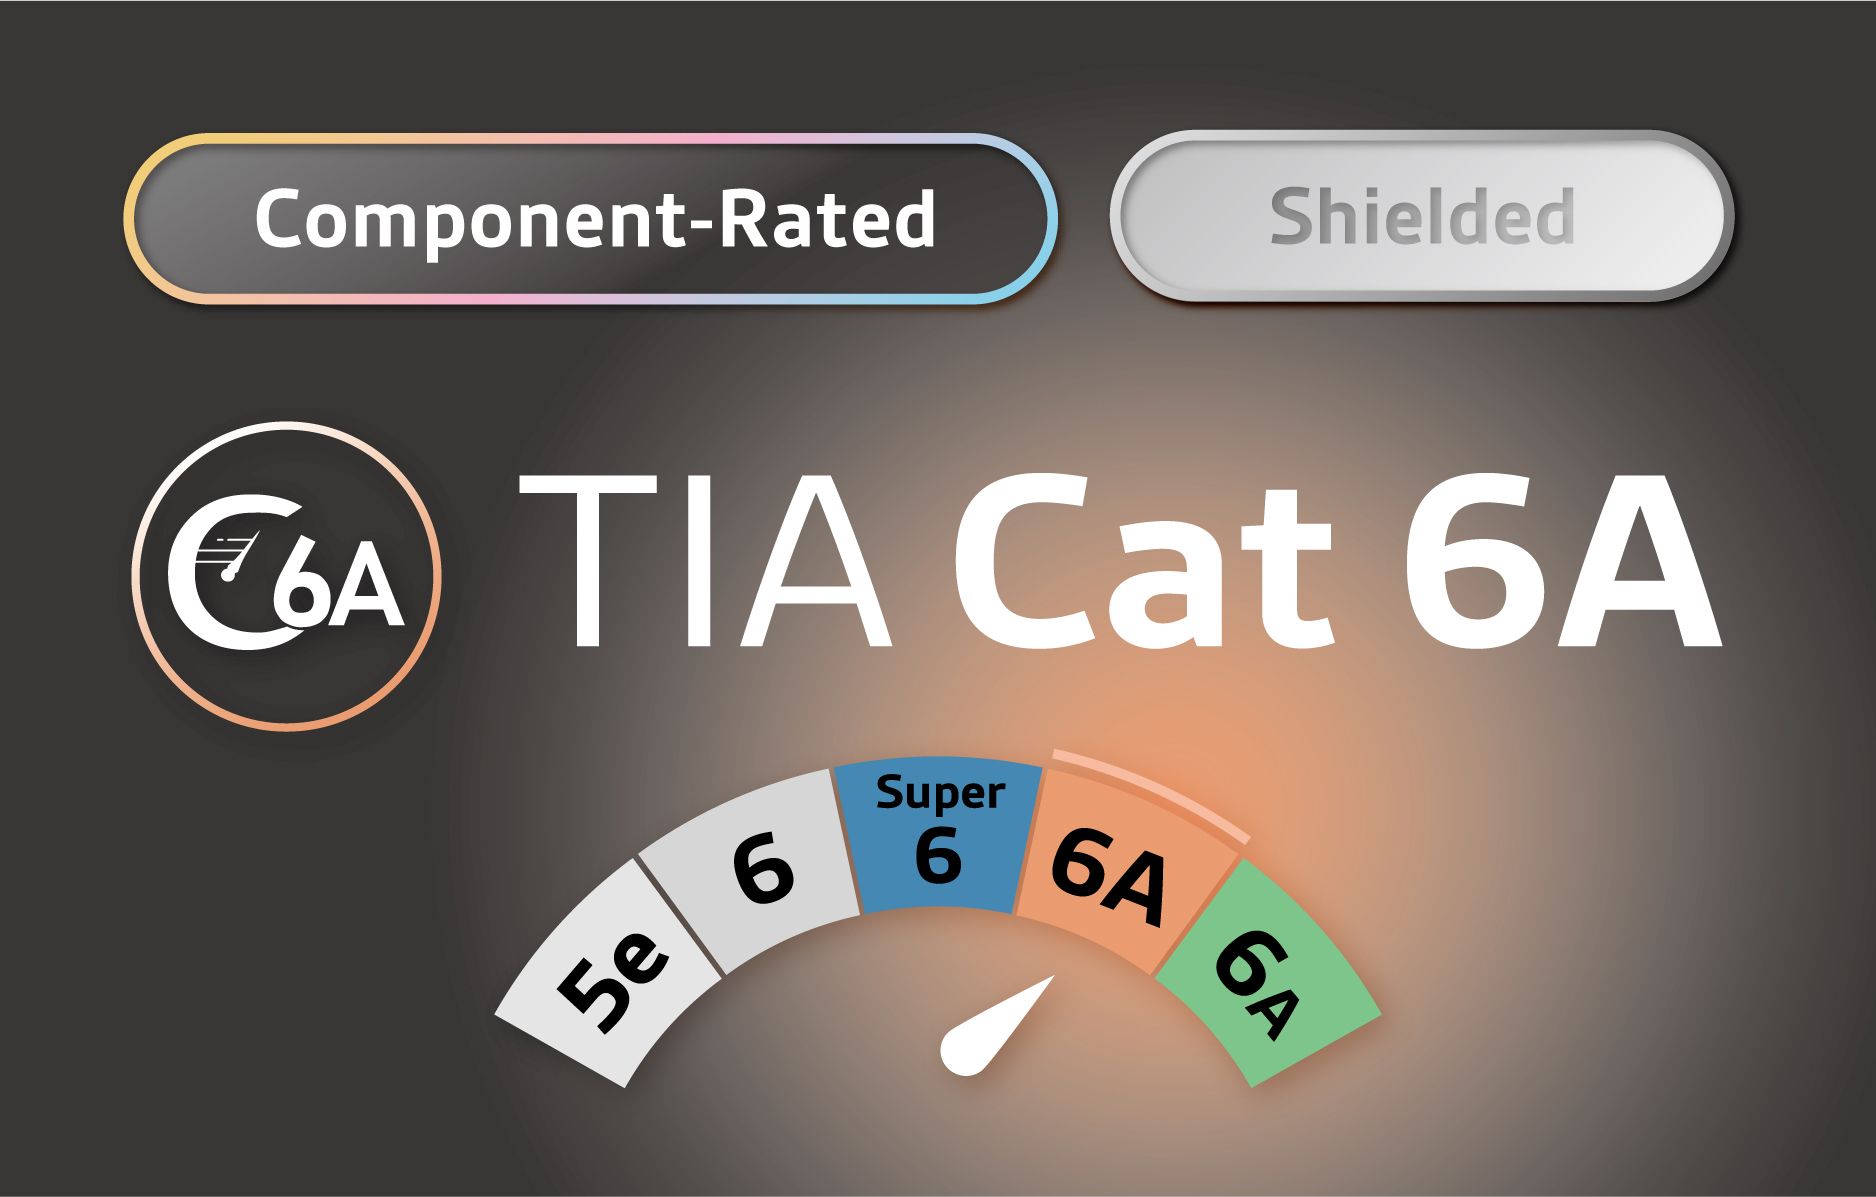 STP - تصنيف المكونات TIA Cat 6A - حل محمي معتمد من TIA C6A للمكونات